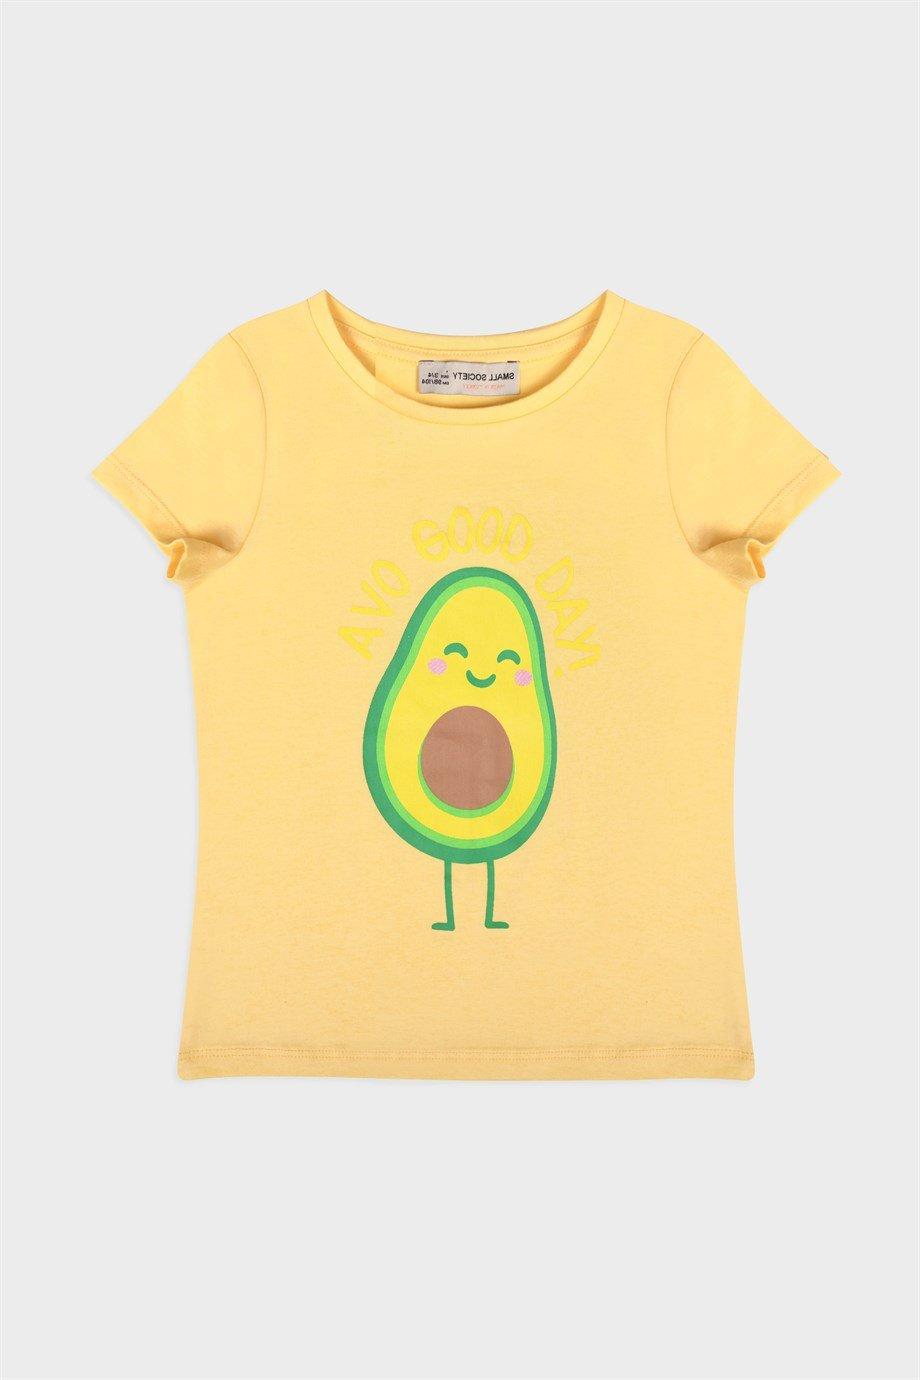 Small Society Yellow Avacado Printed T-Shirt for Girl